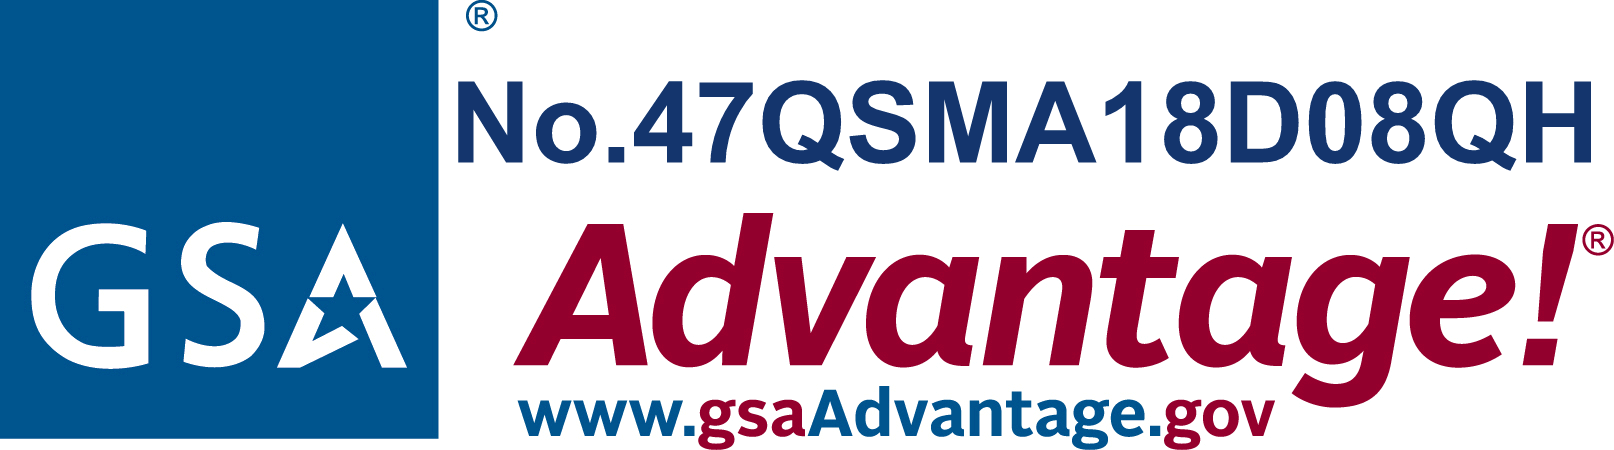 Purchase military items on GSA Advantage